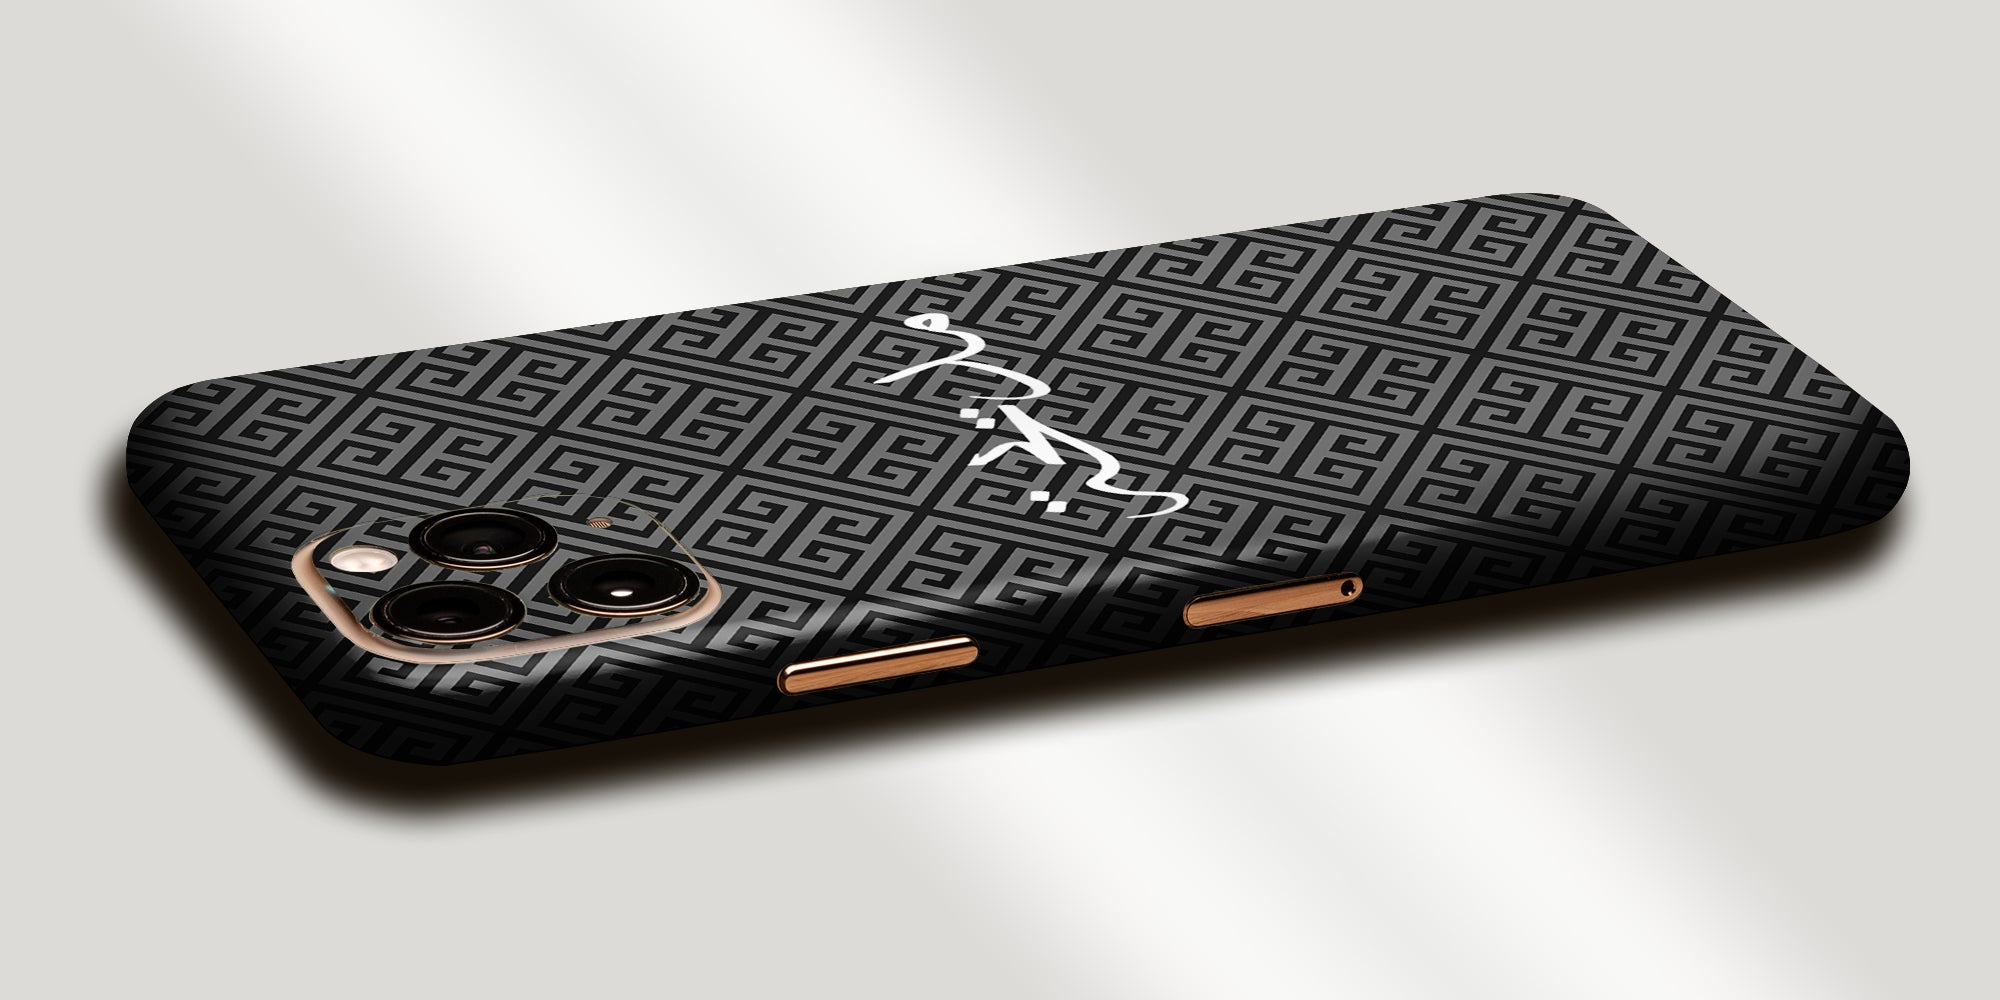 Greek Design Decal Skin With Personalised Arabic Name Phone Wrap - Grey